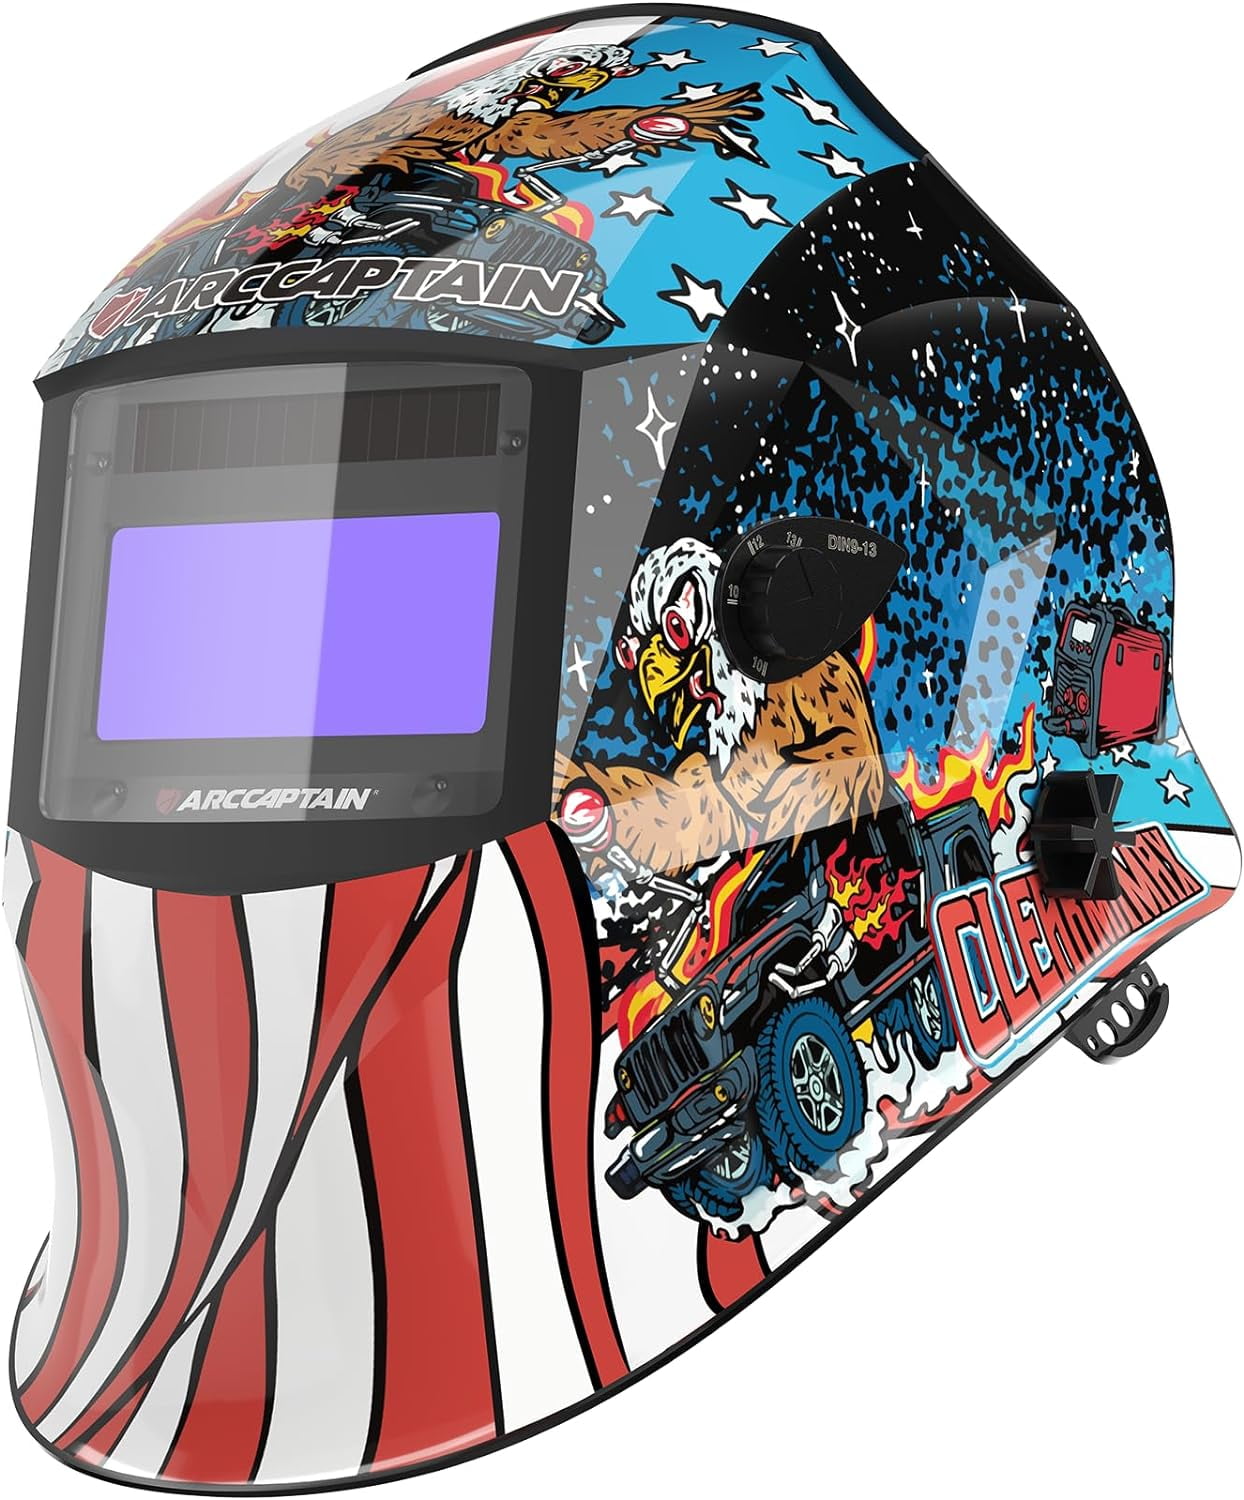 ARCCAPTAIN Welding Helmet Auto Darkening, Large View Welding Hood Mask True Color with Top Optical Clarity